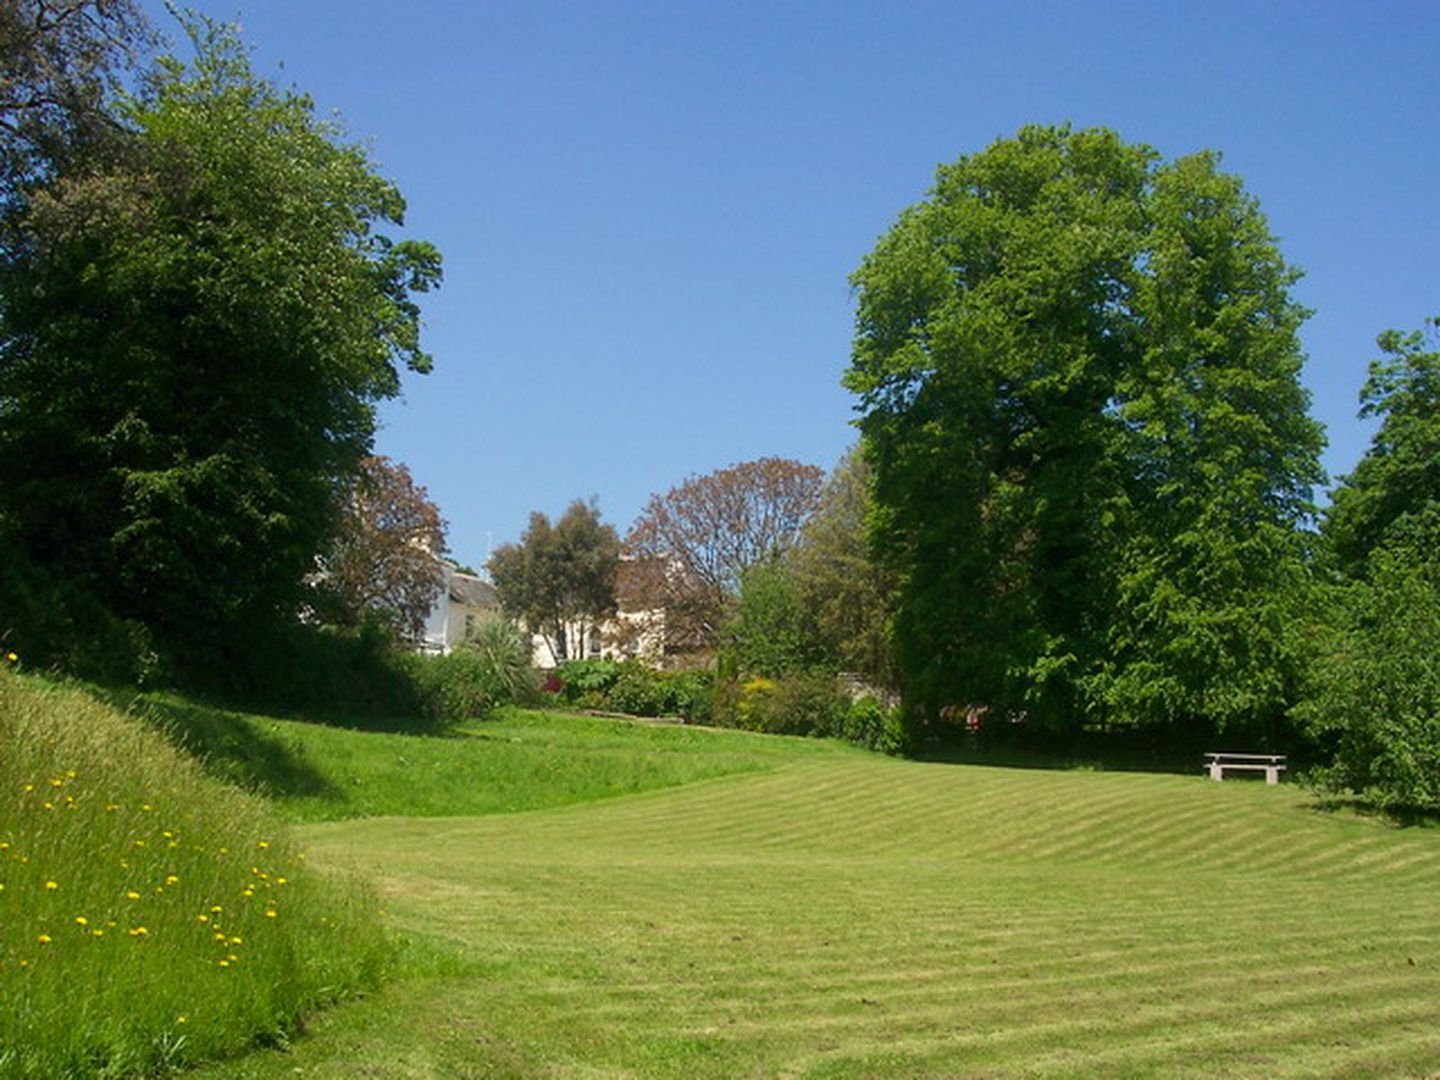 The Barn Aveton Ford Grounds